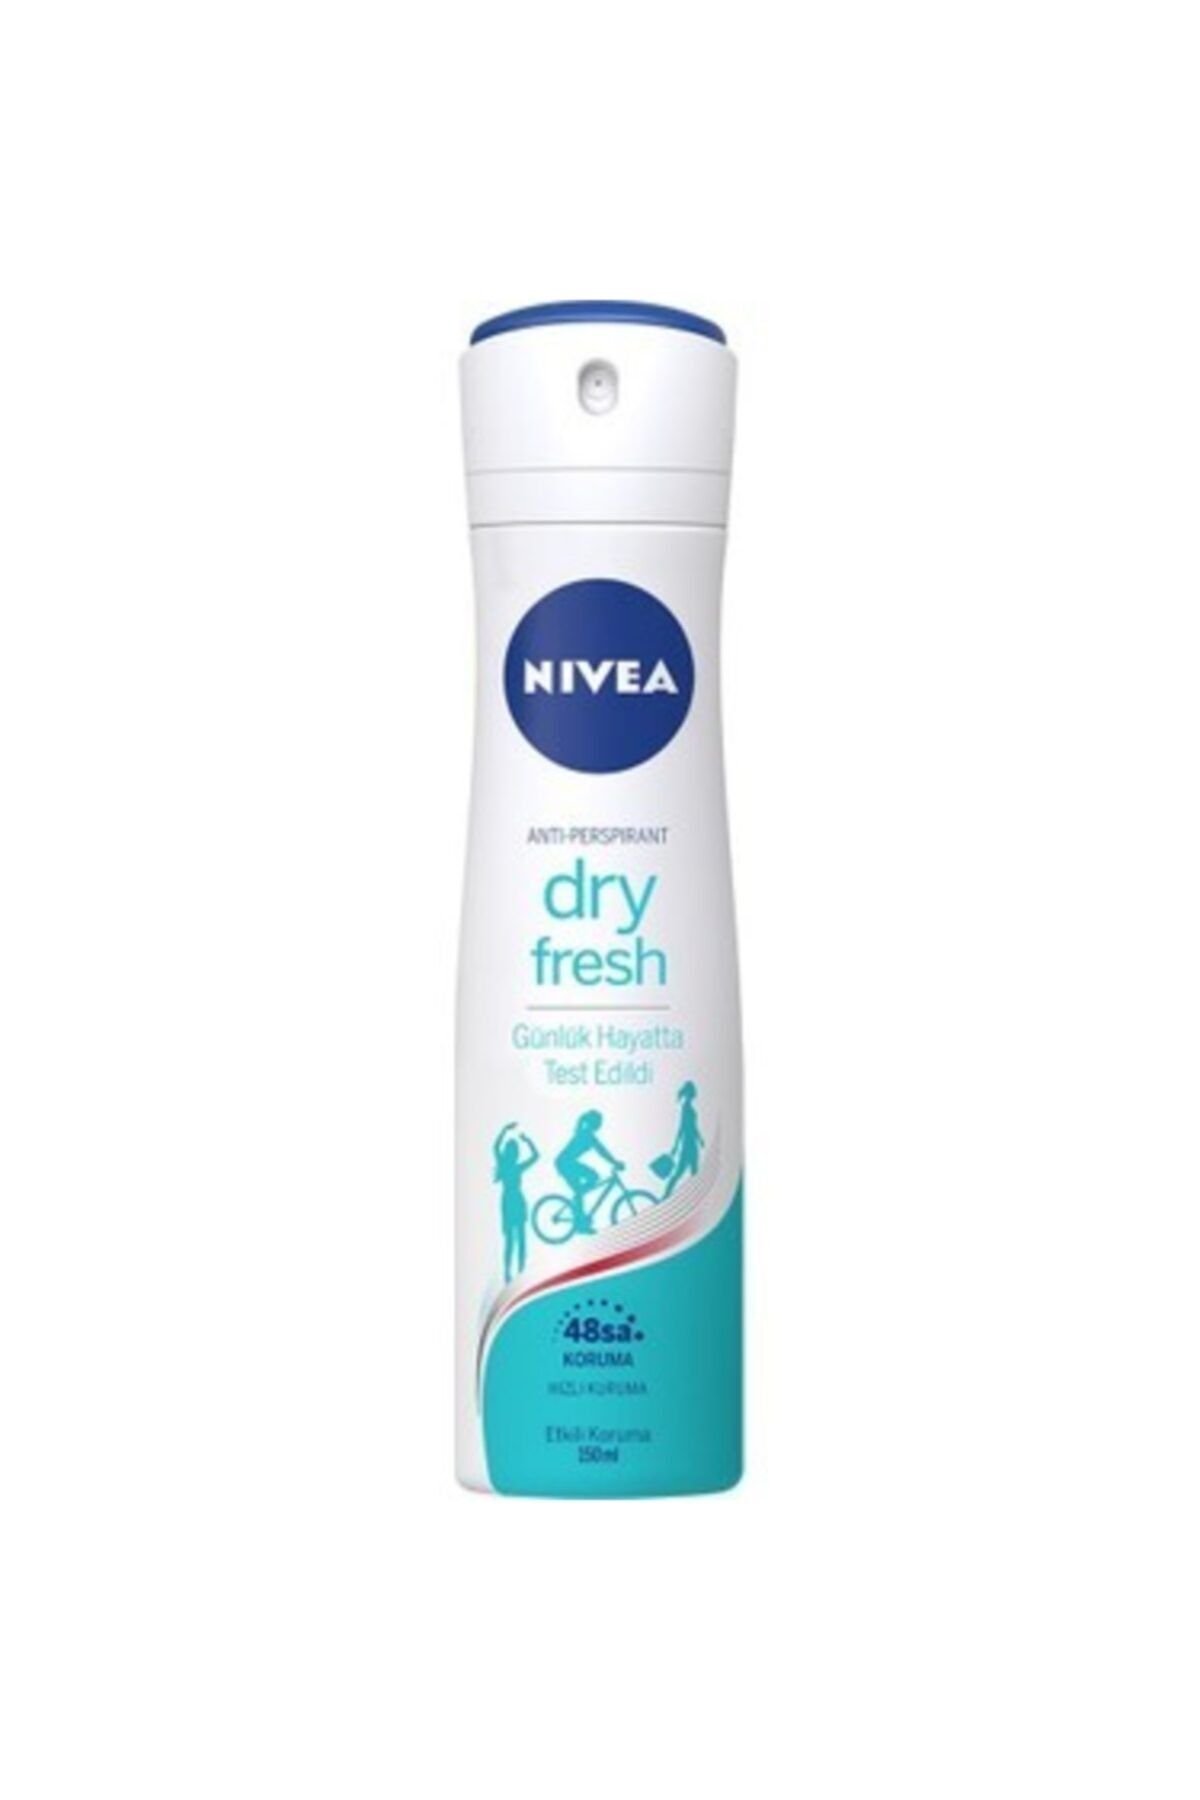 NIVEA Kadın Deodorant Dry Fresh 150ml